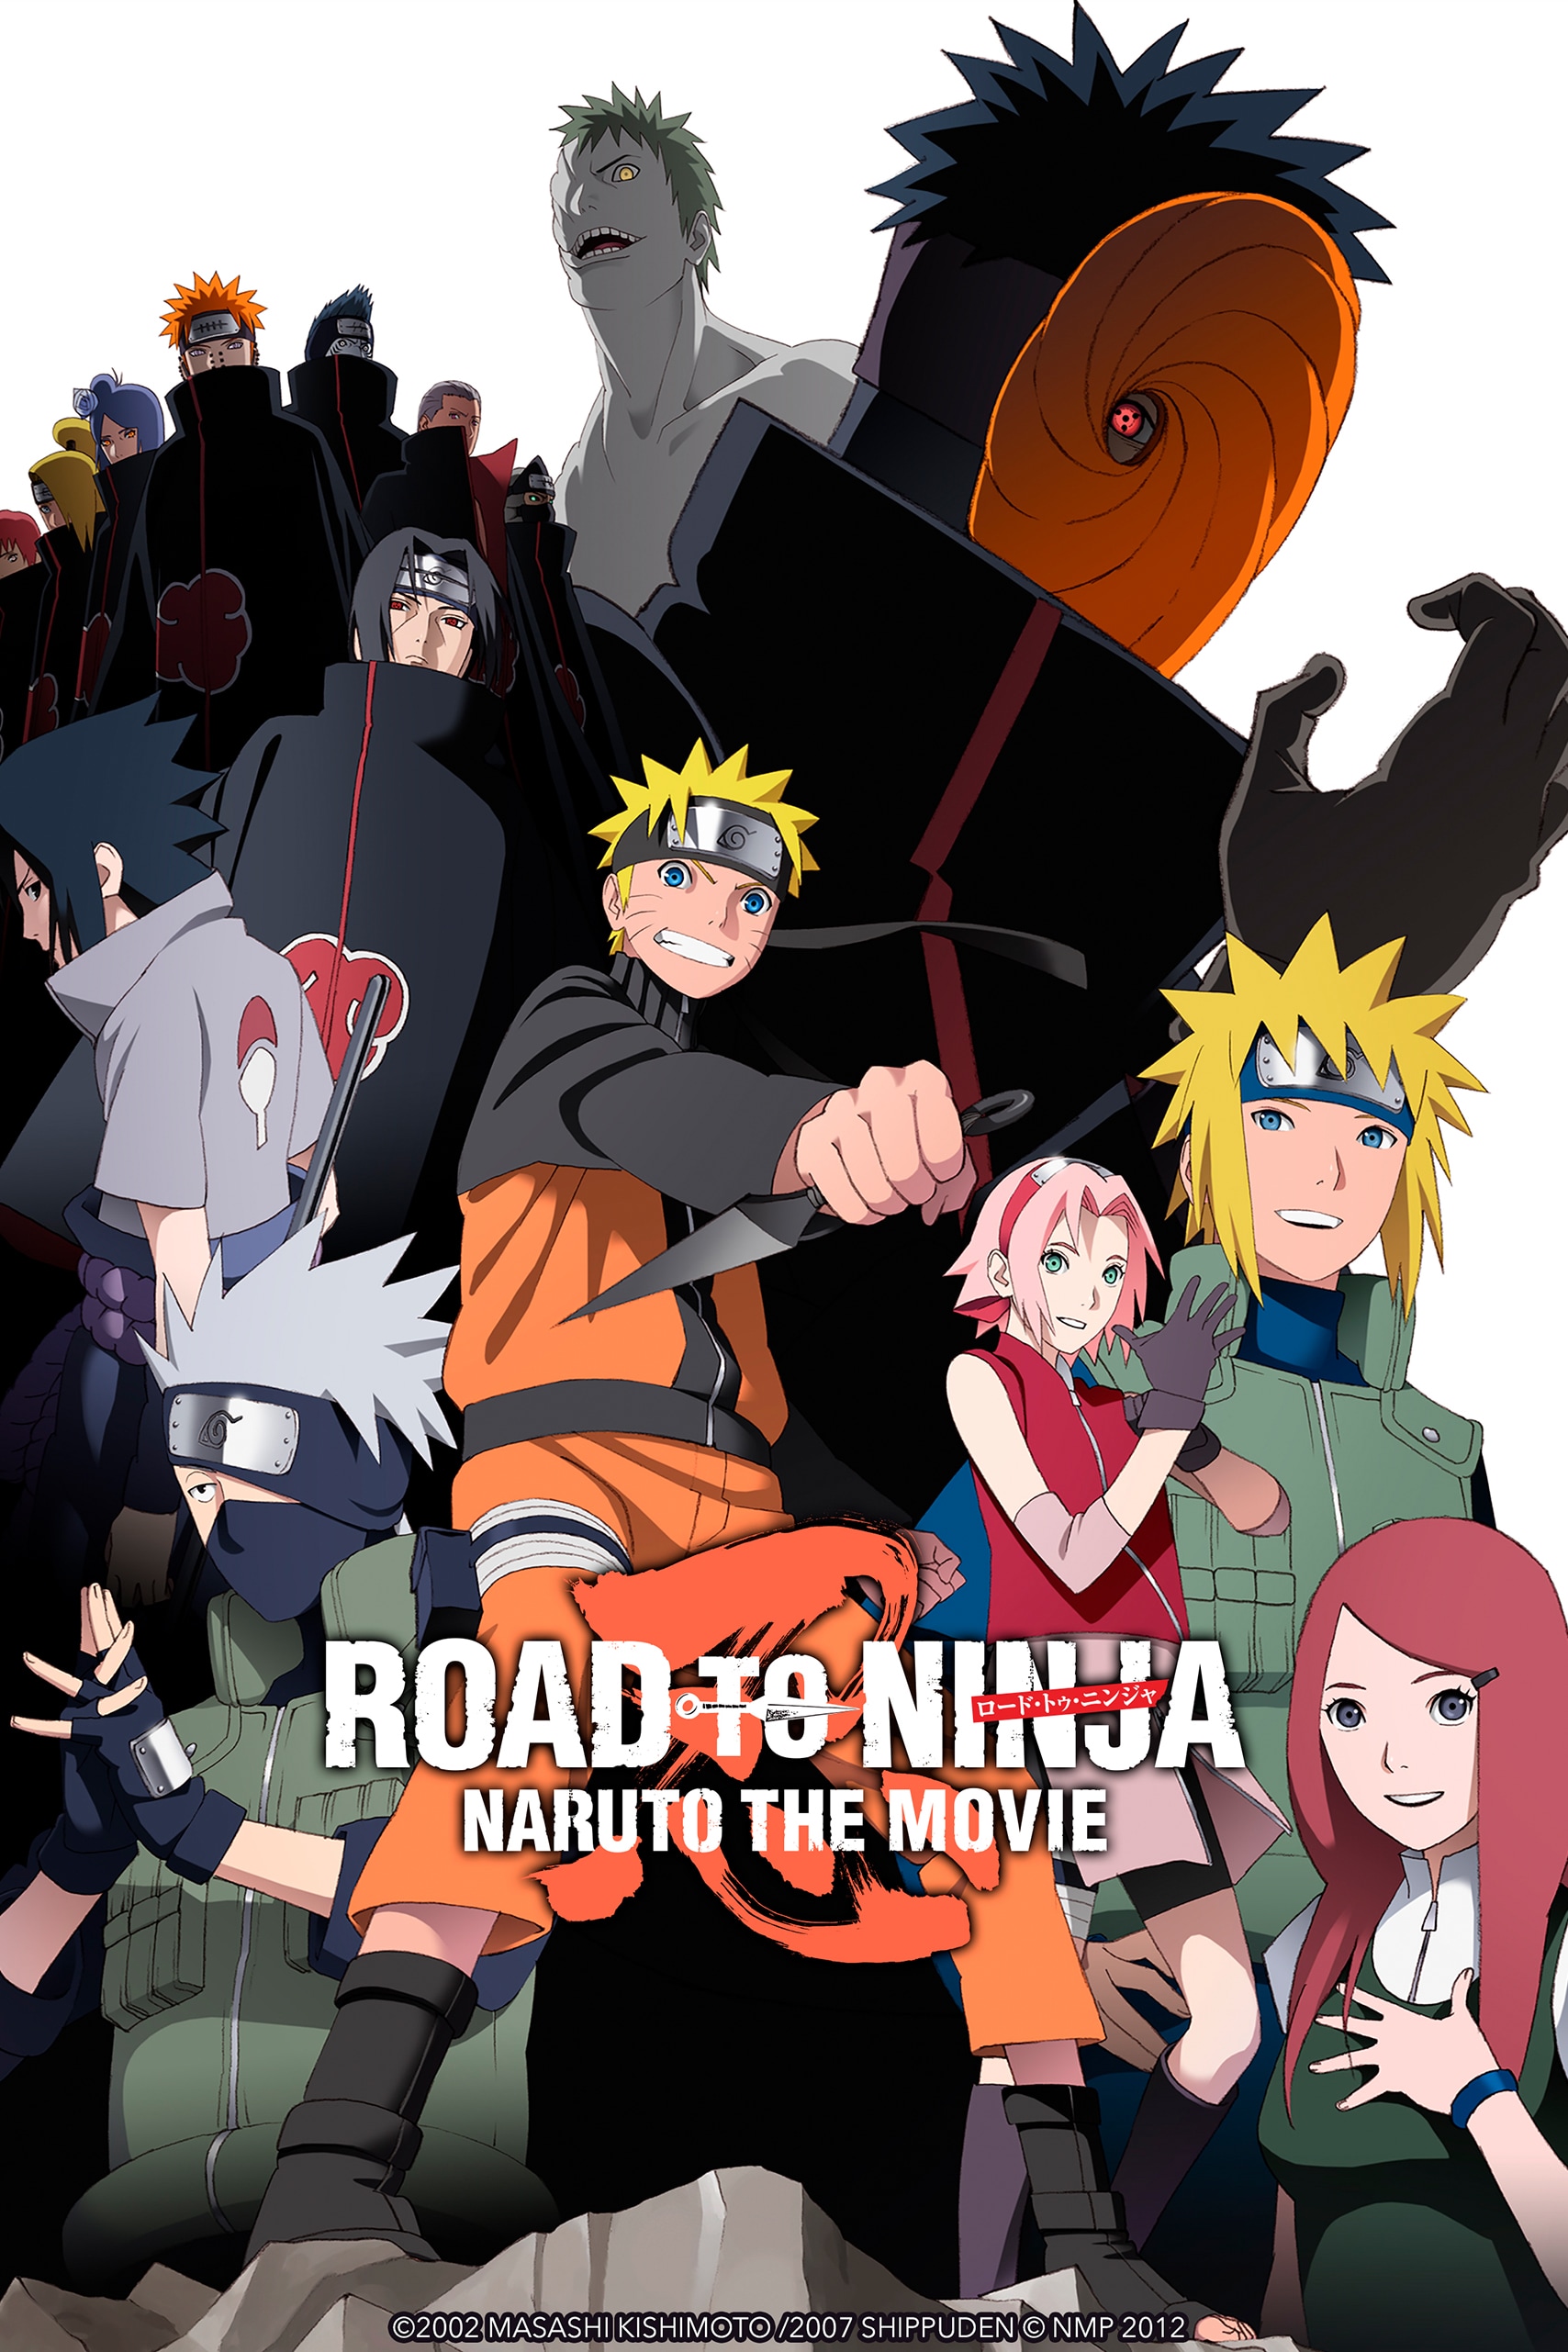  Claro Vídeo adiciona mais filmes de Naruto